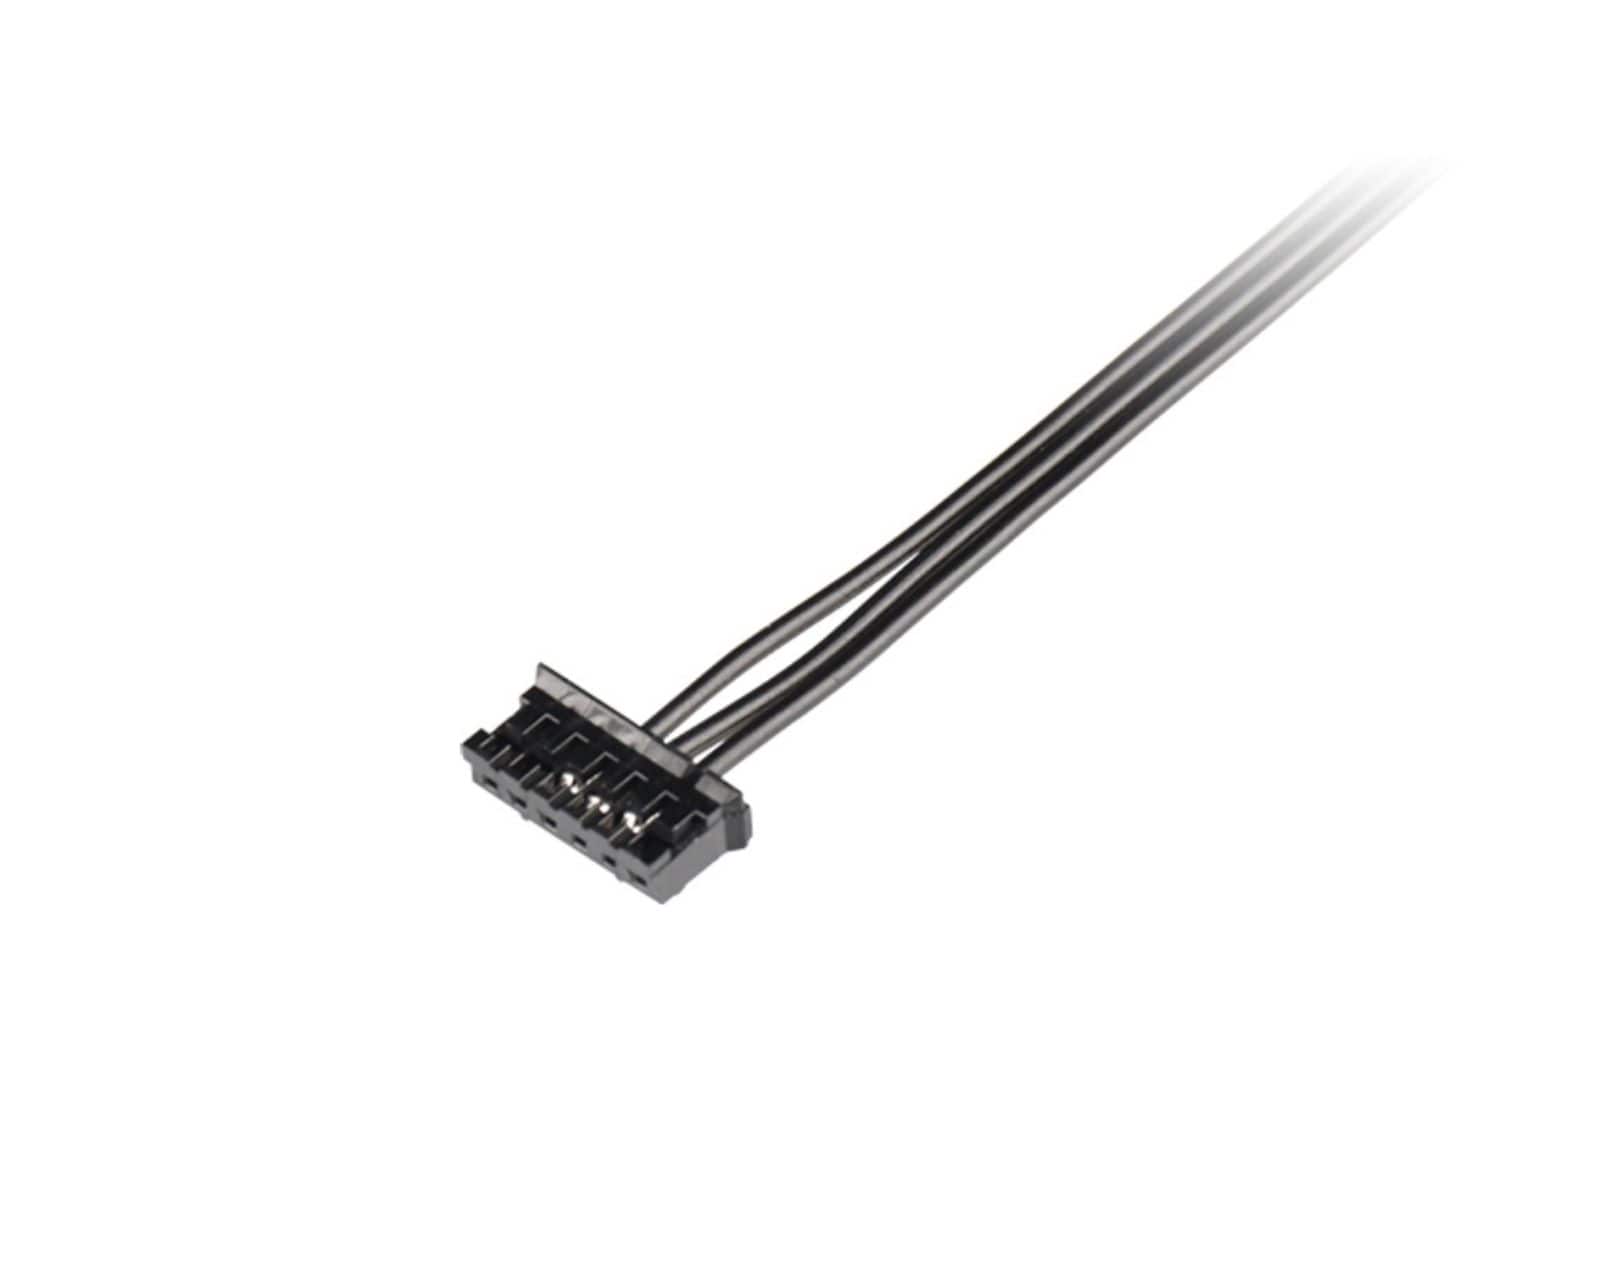 Bykski 5v Addressable RGB (RBW) ASUS AURA Lighting 3-Pin Synchronization Cable (B-FN-RBW-LN) - PrimoChill - KEEPING IT COOL